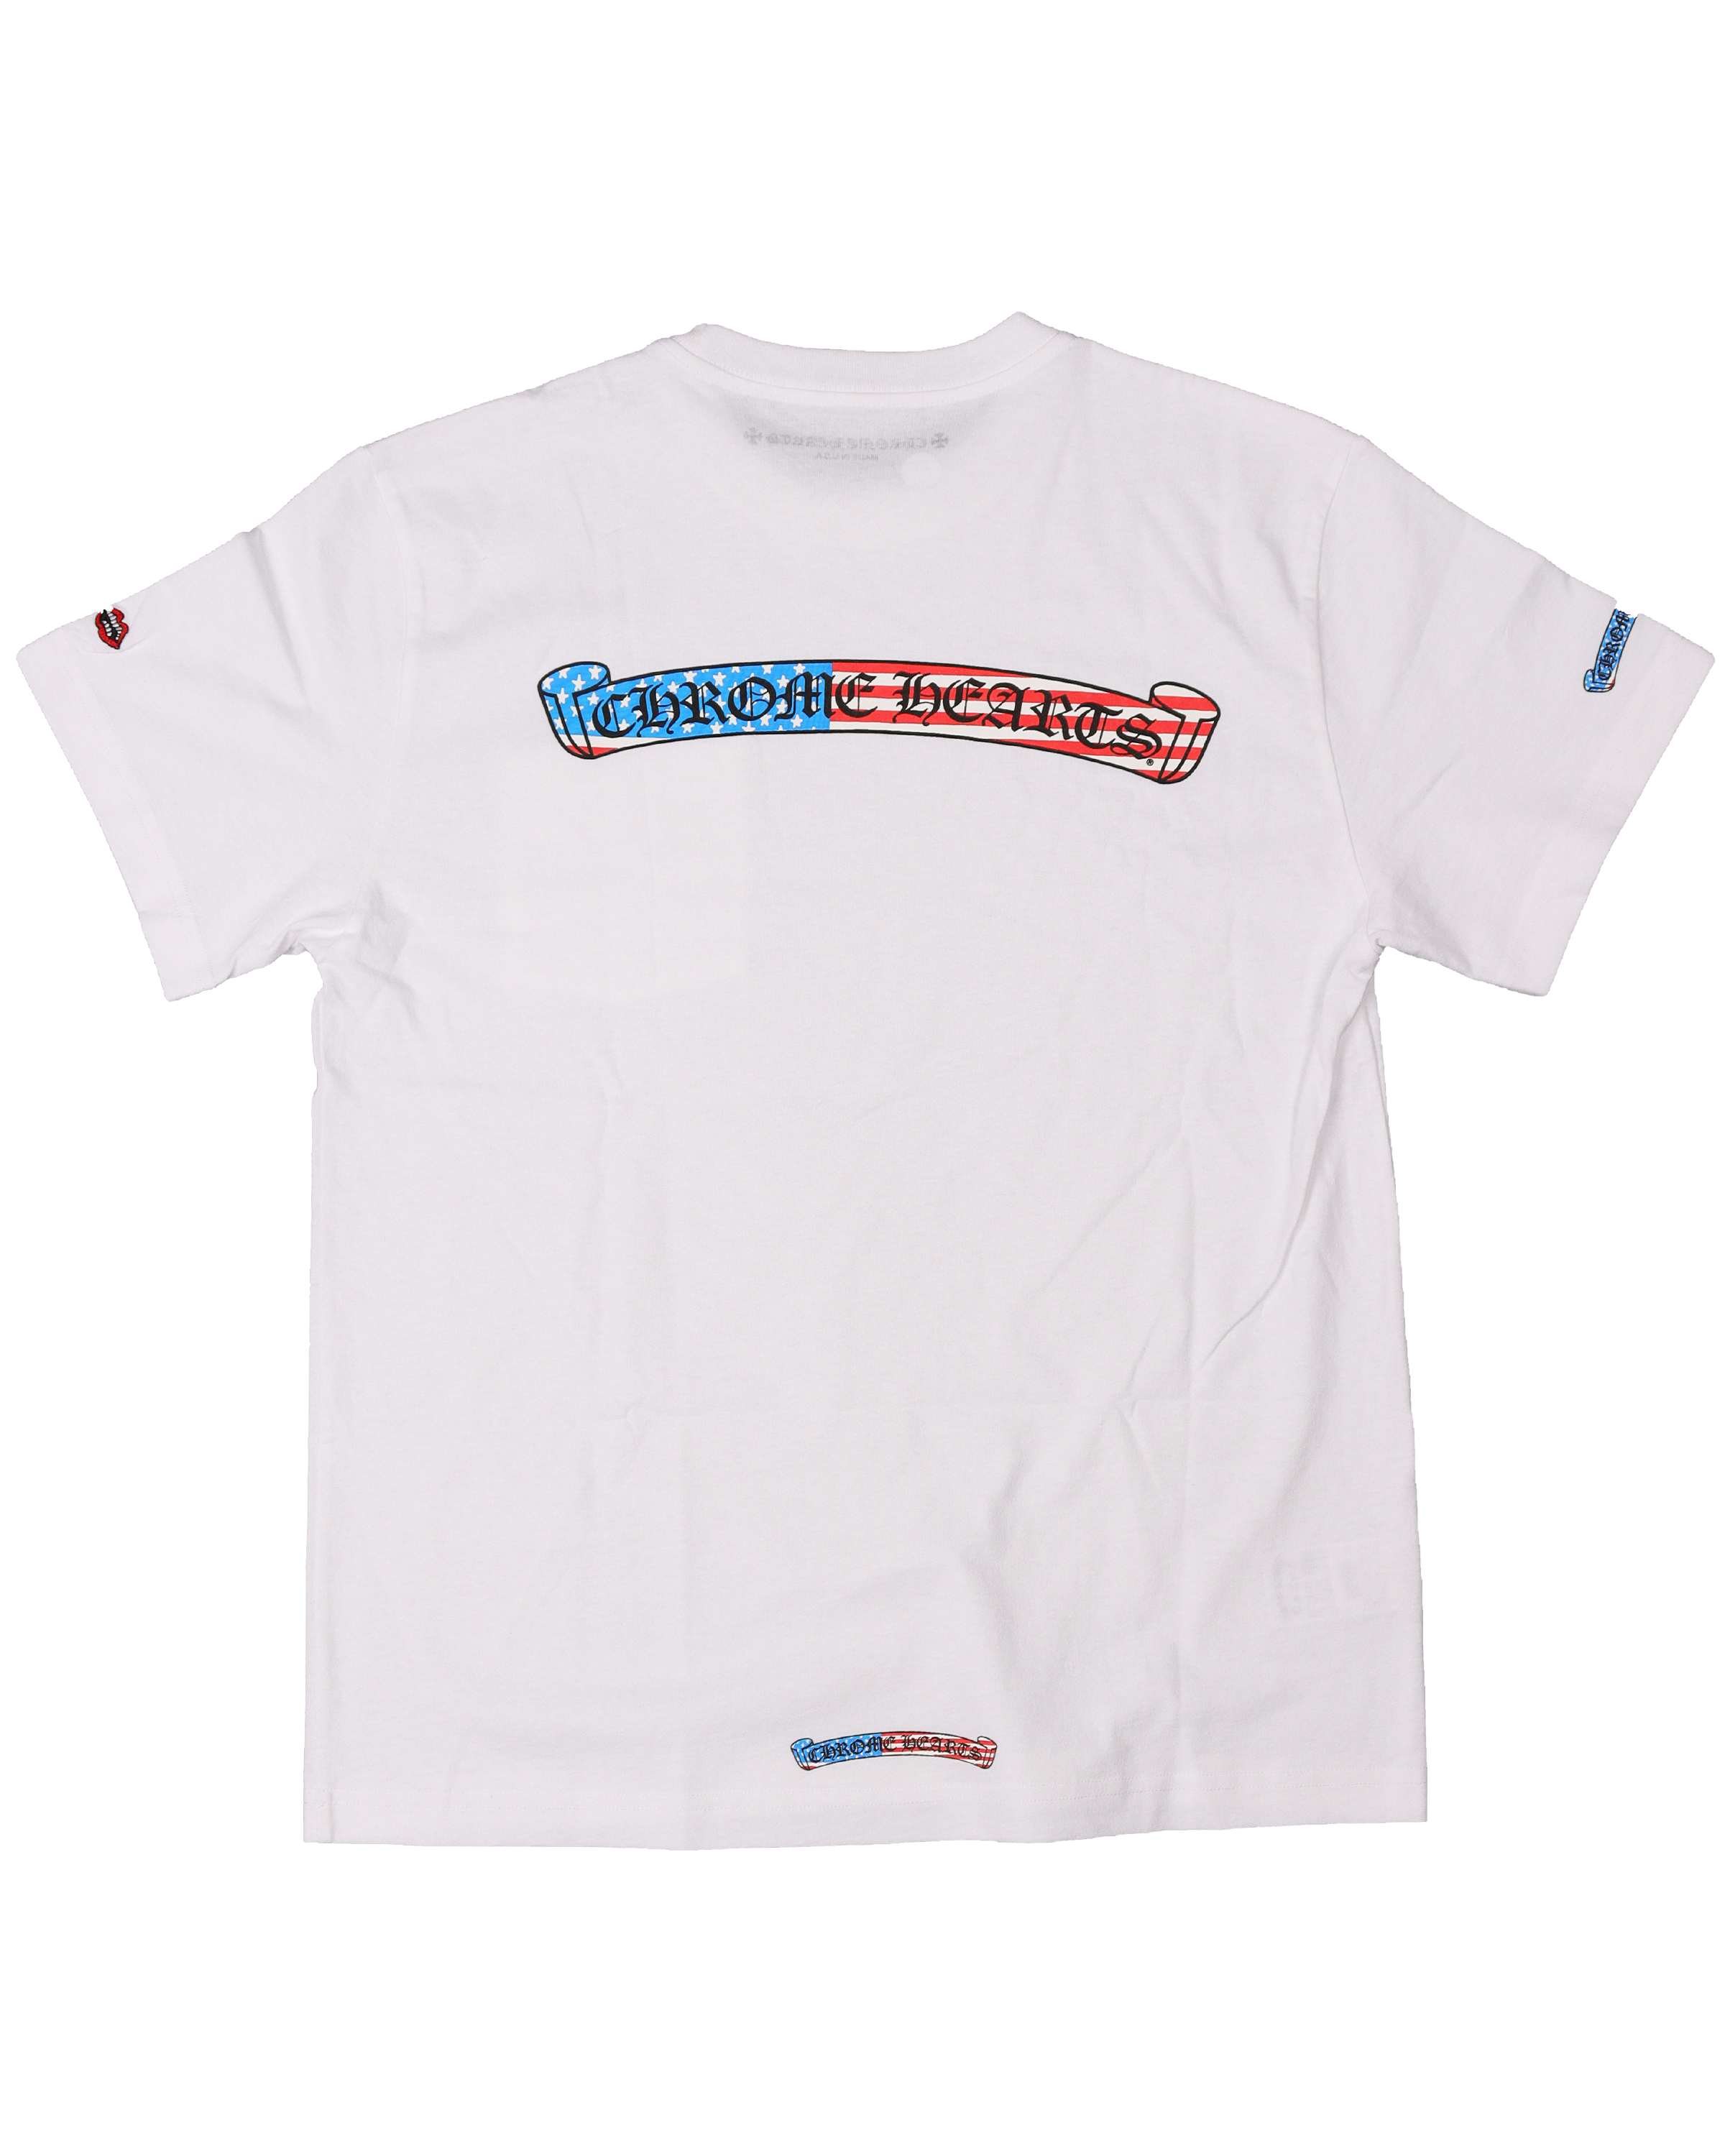 Matty Boy America T-Shirt